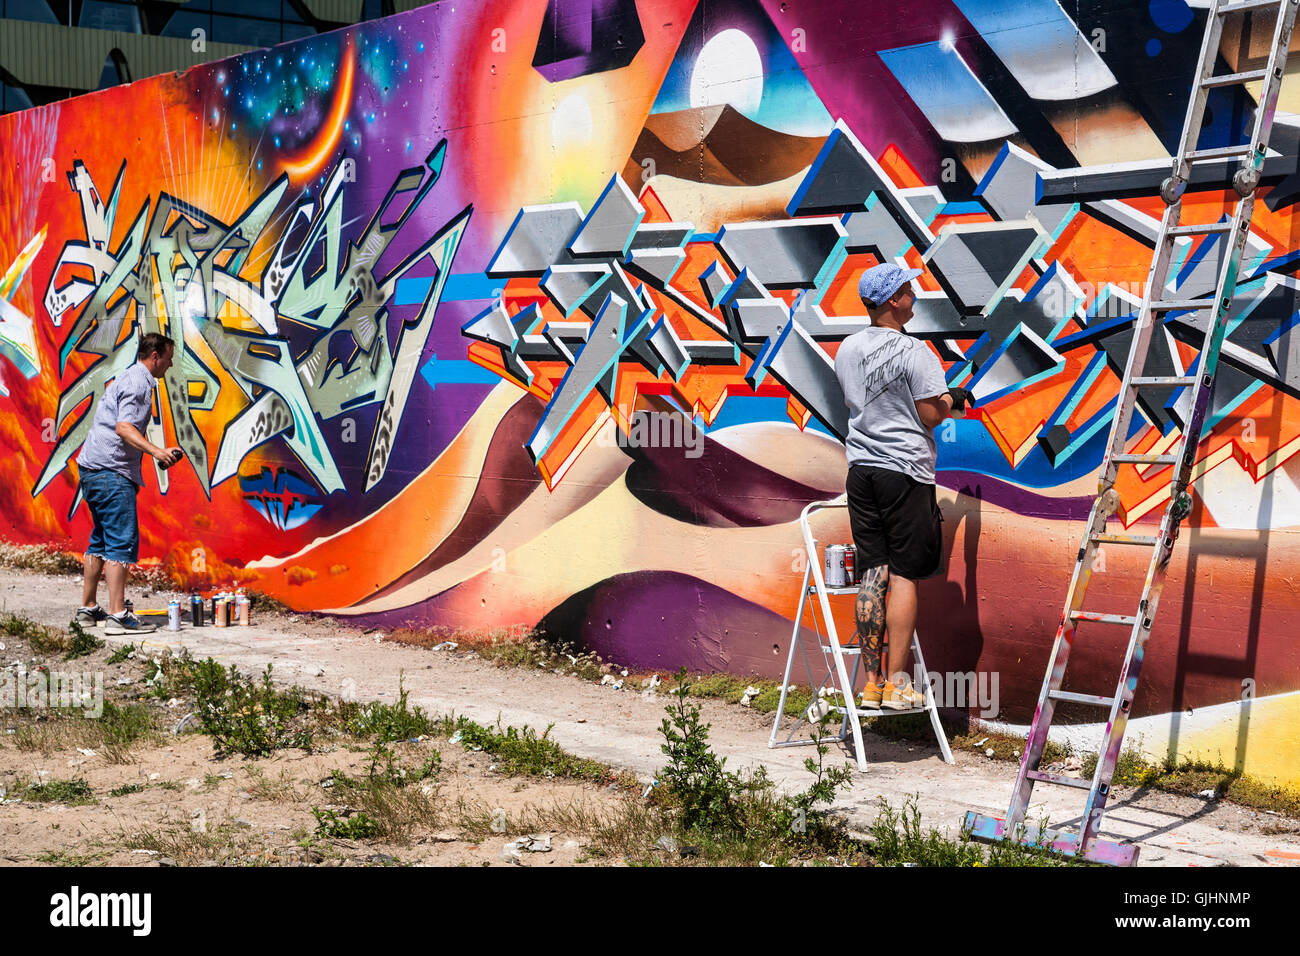 Graffiti artists hard at work painting an old wall, Friedrichshain, Berlin, Germany. Stock Photo